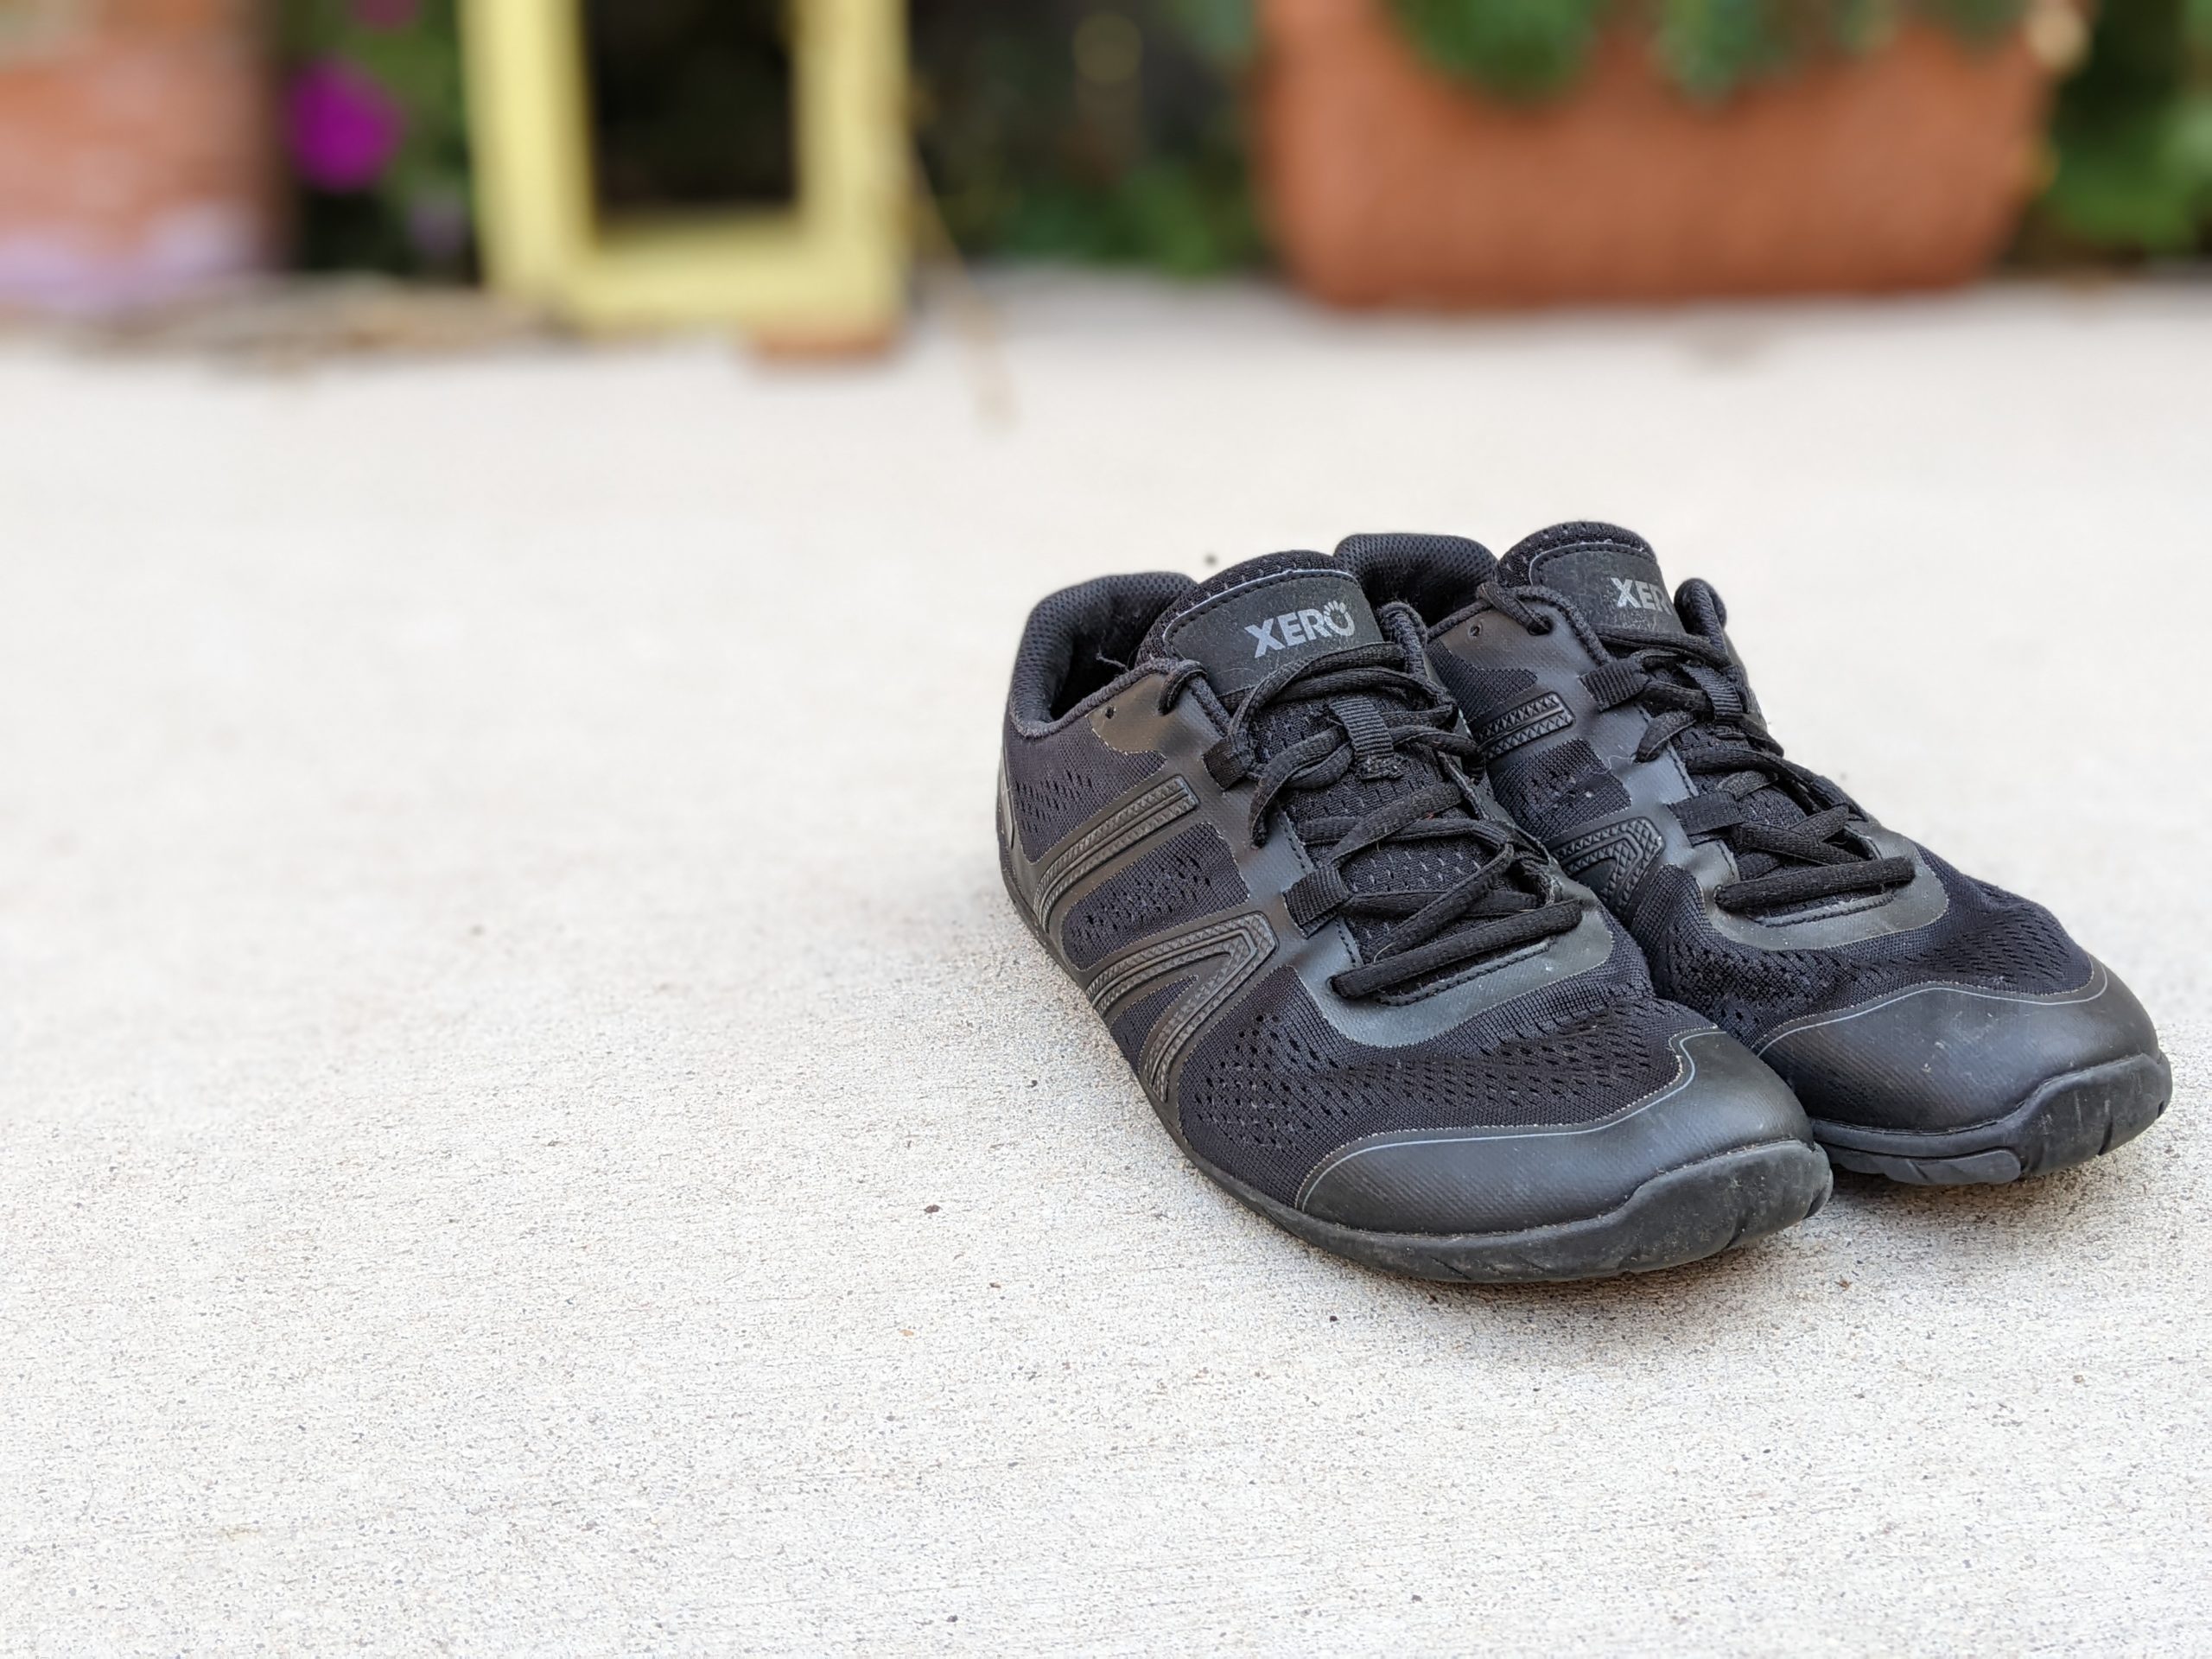 Xero Shoes HFS Review - A True, Lightweight Barefoot Feel?